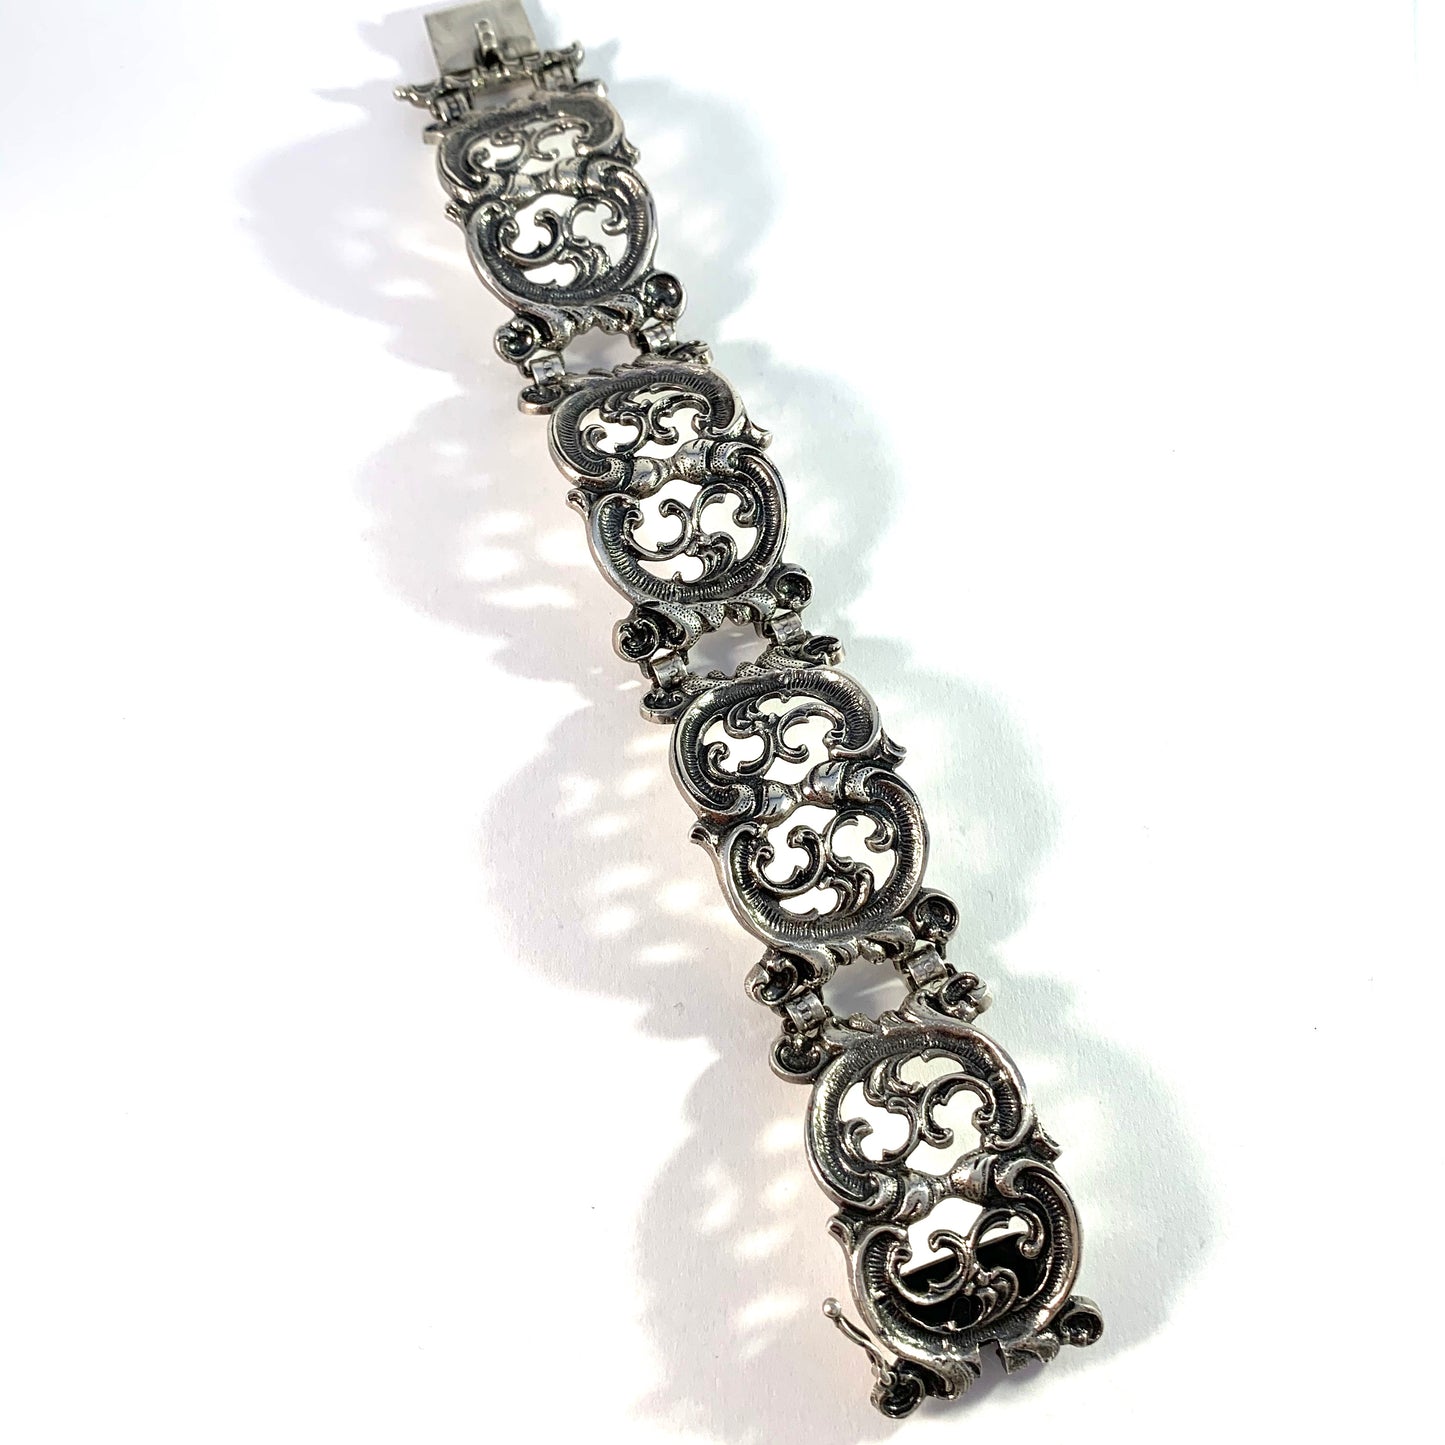 Maker GAS / BAS, Austria early 1900 Massive Sterling Silver Bracelet.